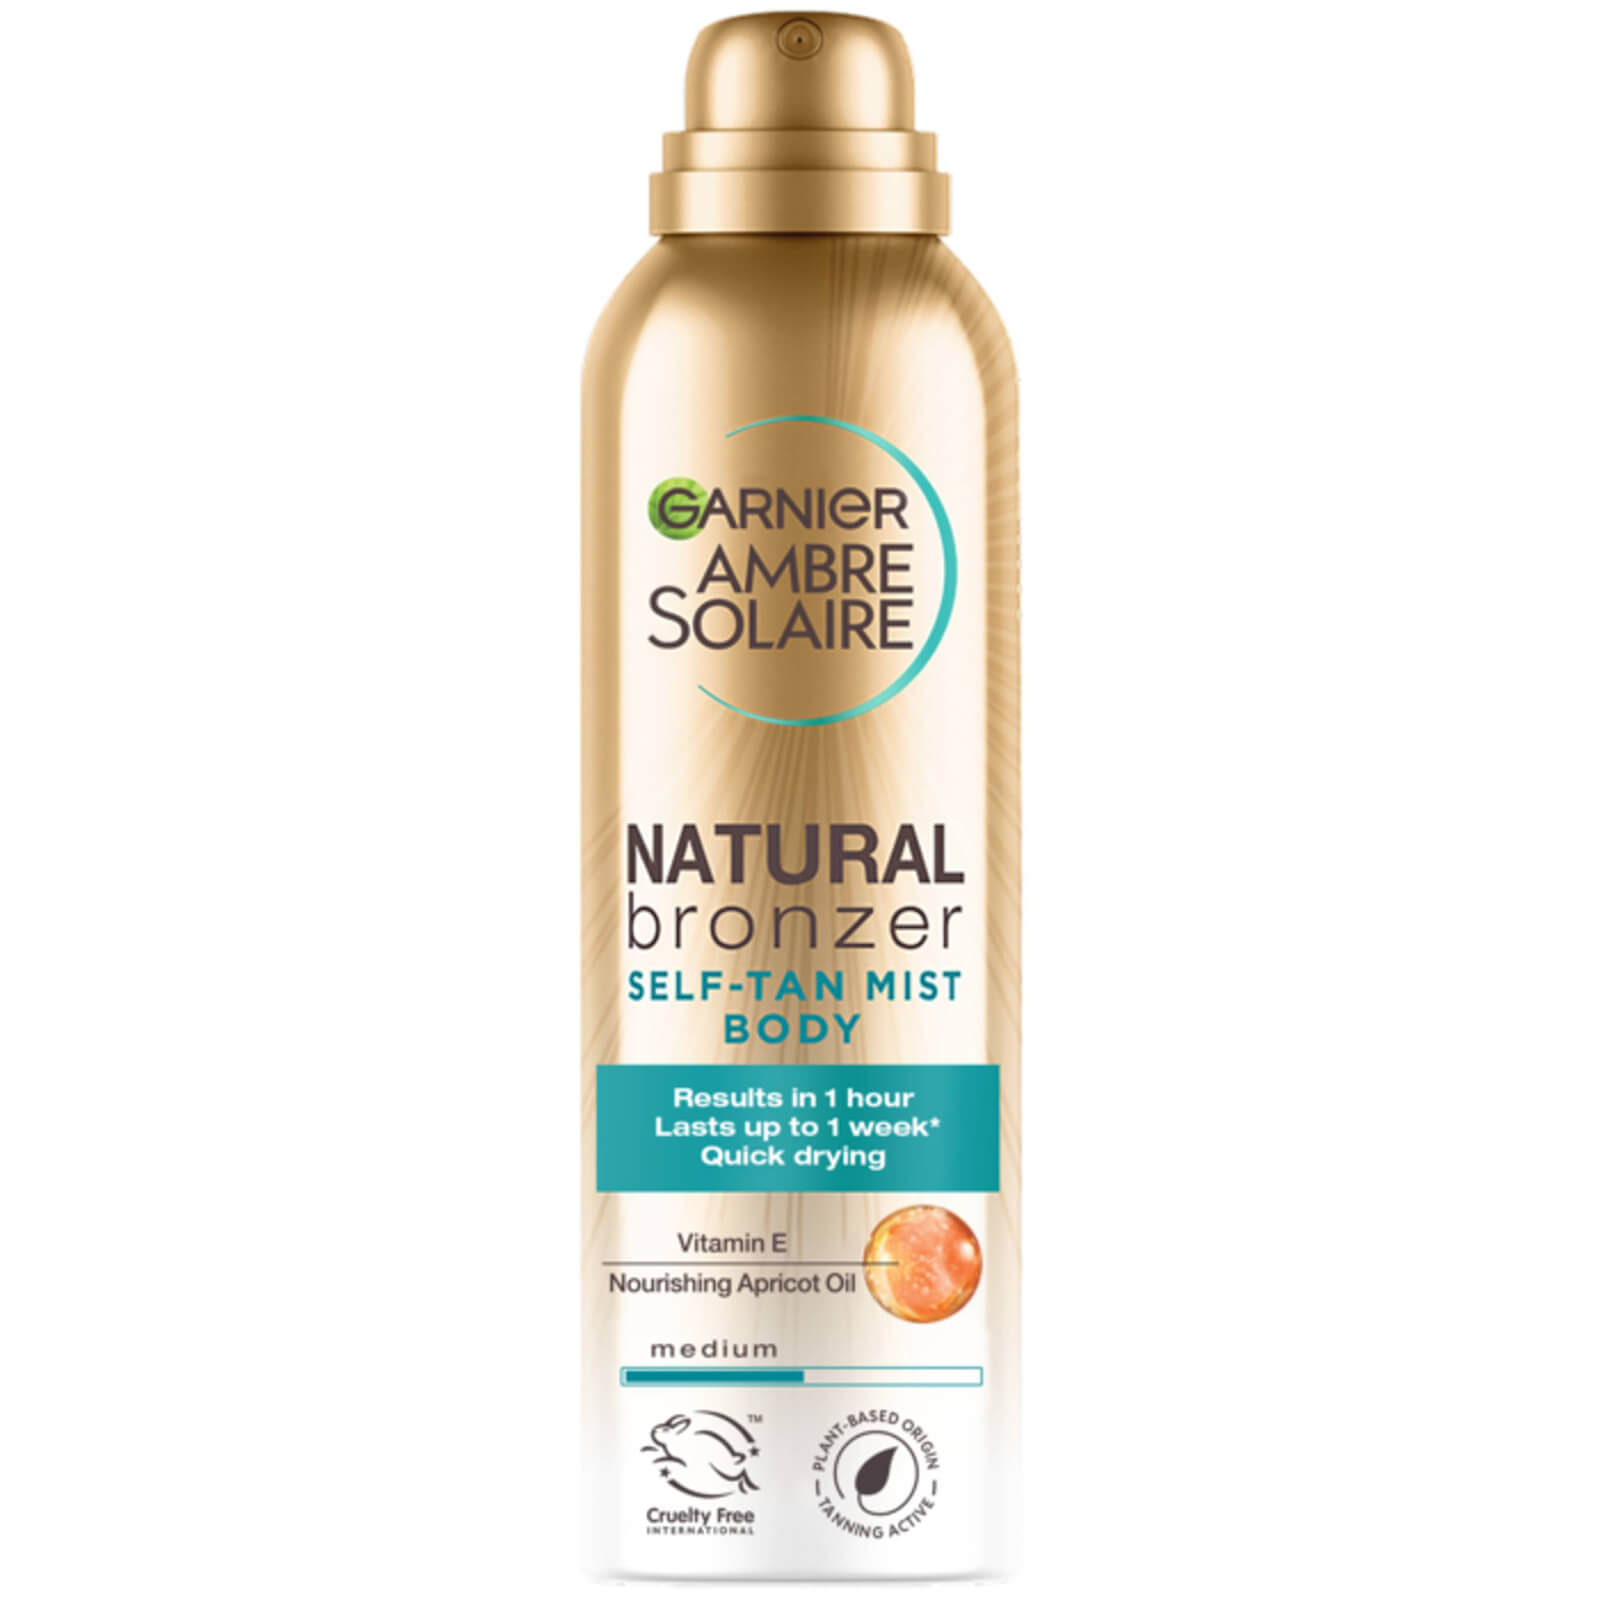 Garnier Ambre Solaire Natural Bronzer Quick Drying Body Self Tan Mist Medium 150ml product